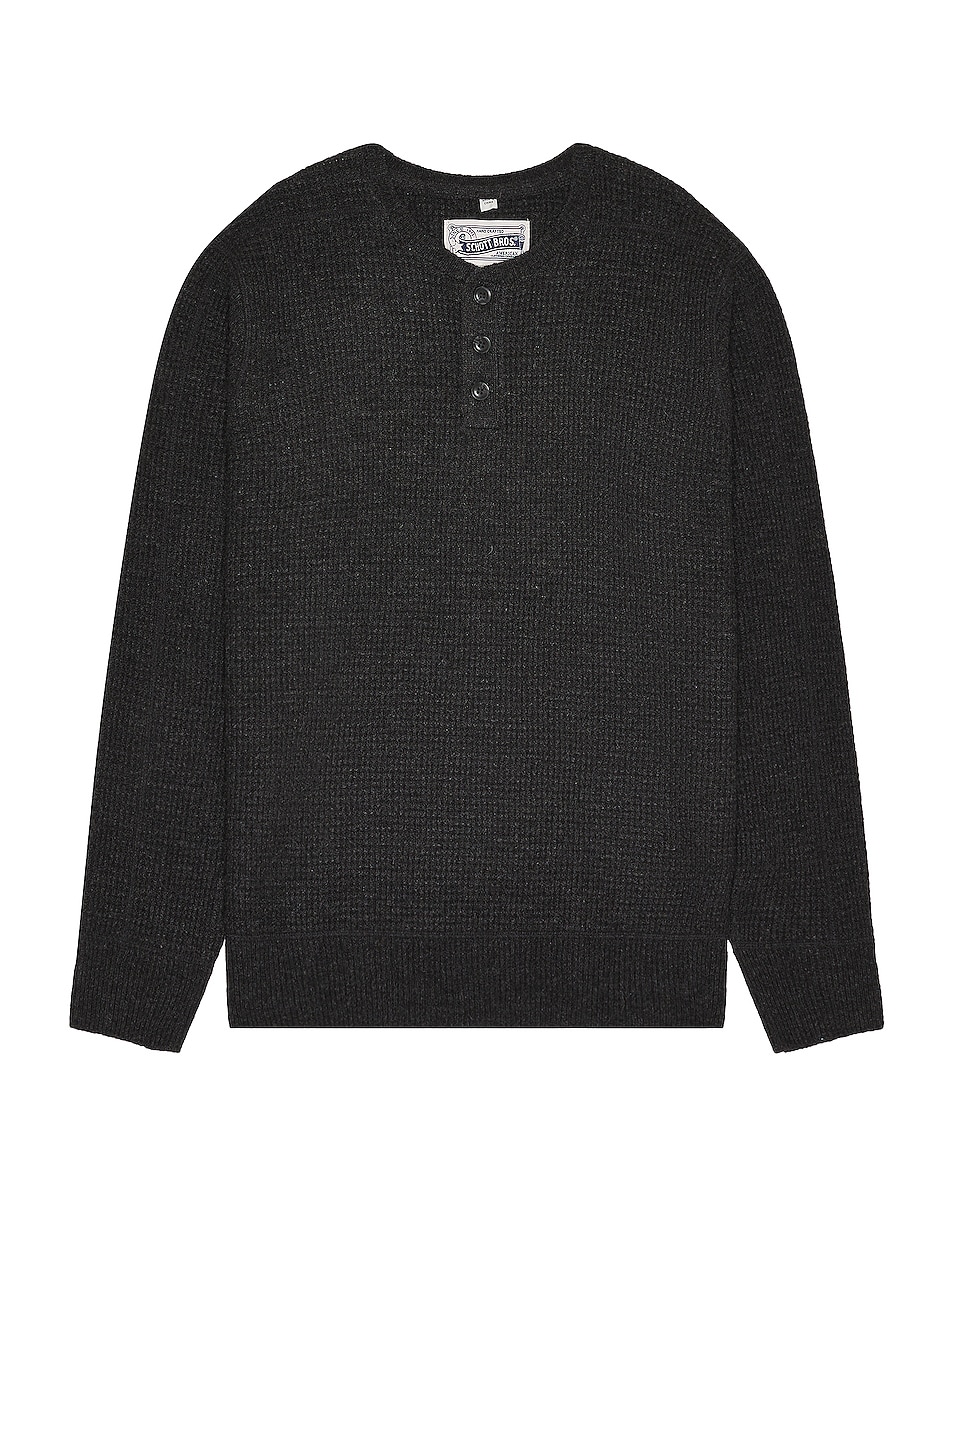 Button Henley Sweater in Black